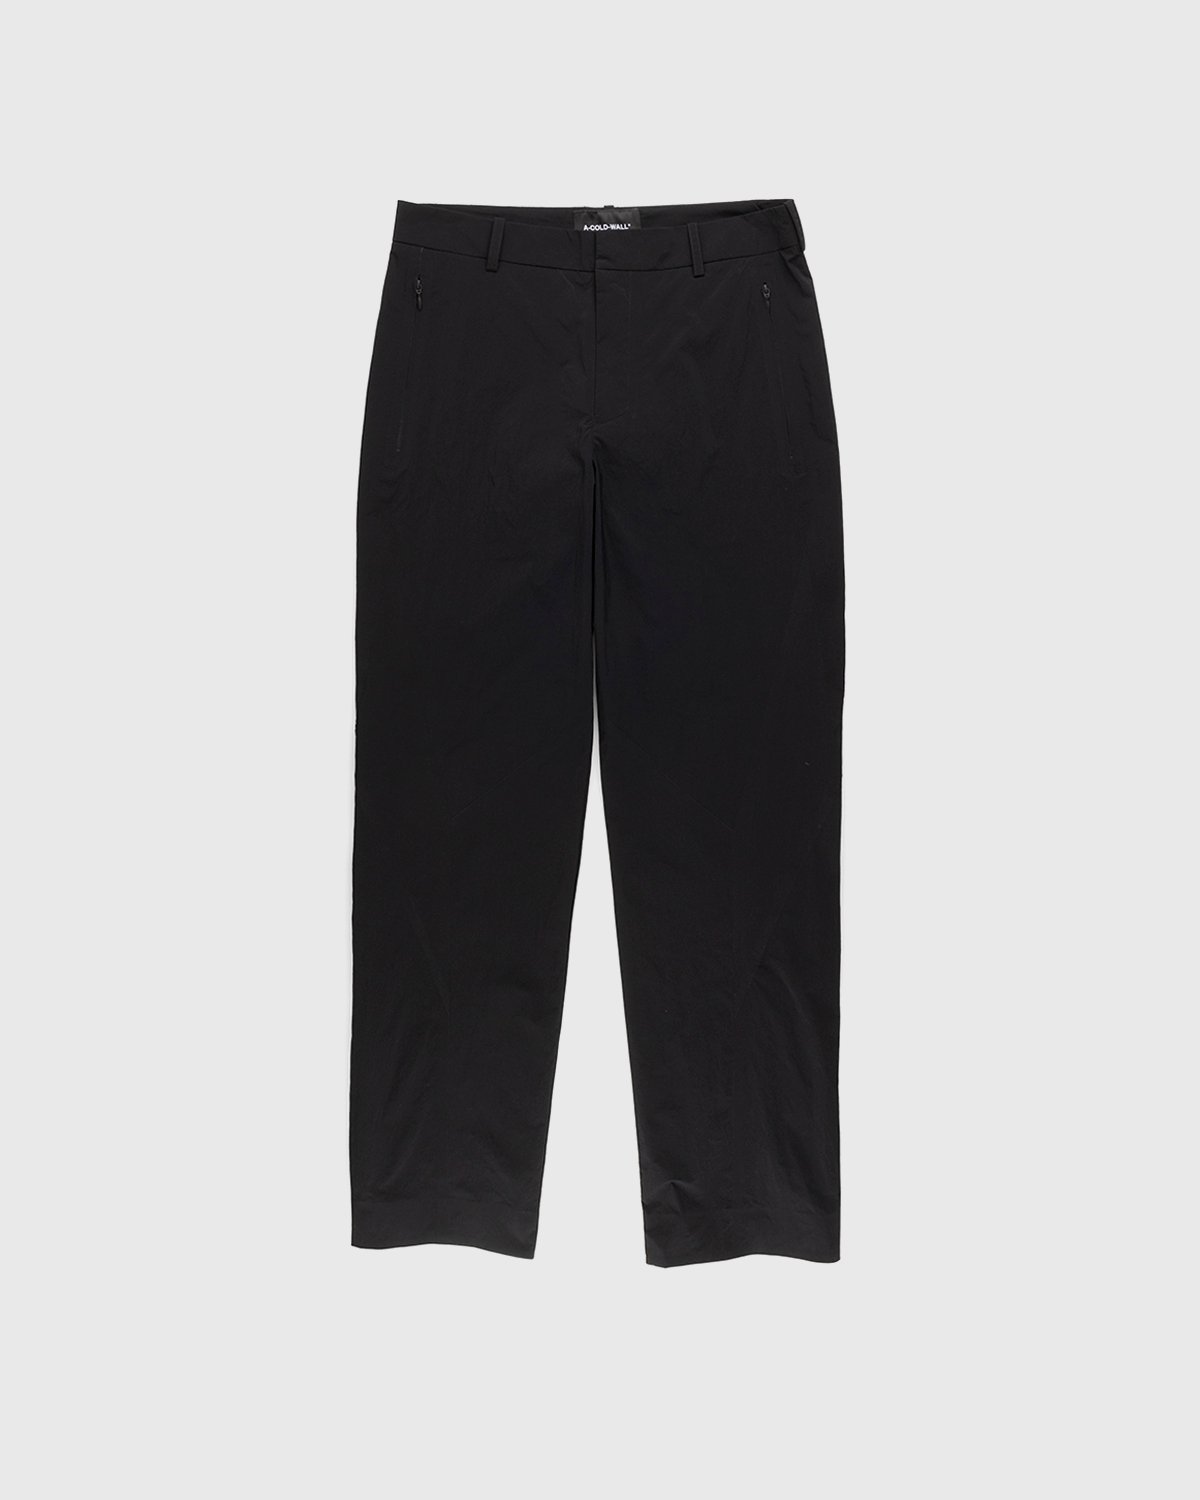 A-Cold-Wall* - Stealth Nylon Pant Black - Clothing - Black - Image 1